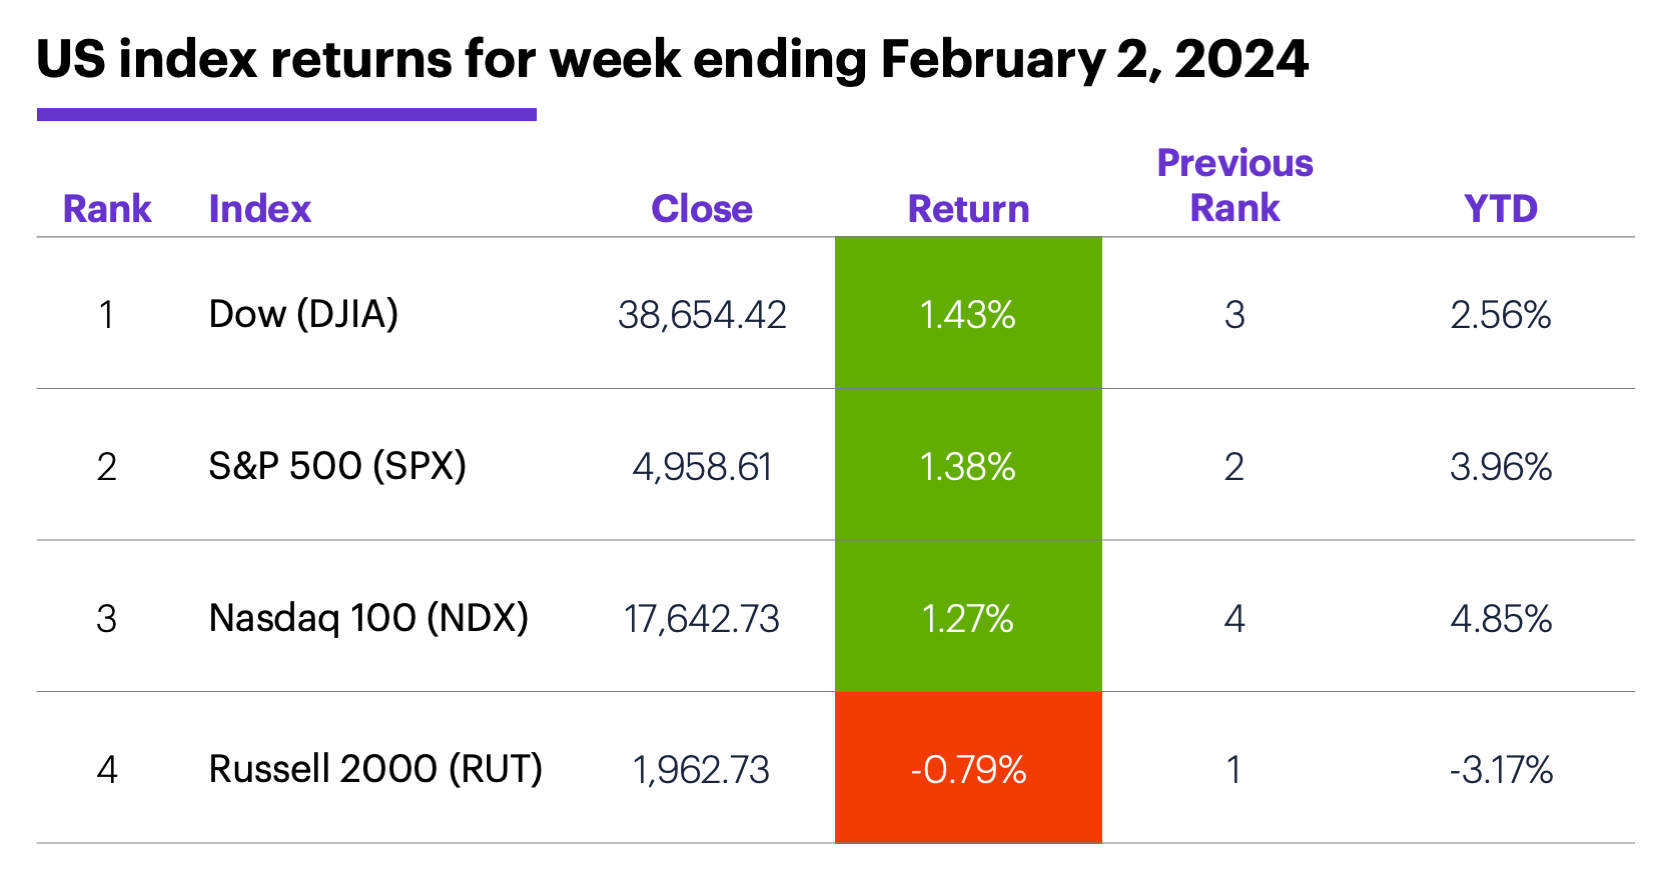 US stock index performance for week ending 2/2/24. S&P 500 (SPX), Nasdaq 100 (NDX), Russell 2000 (RUT), Dow Jones Industrial Average (DJIA).